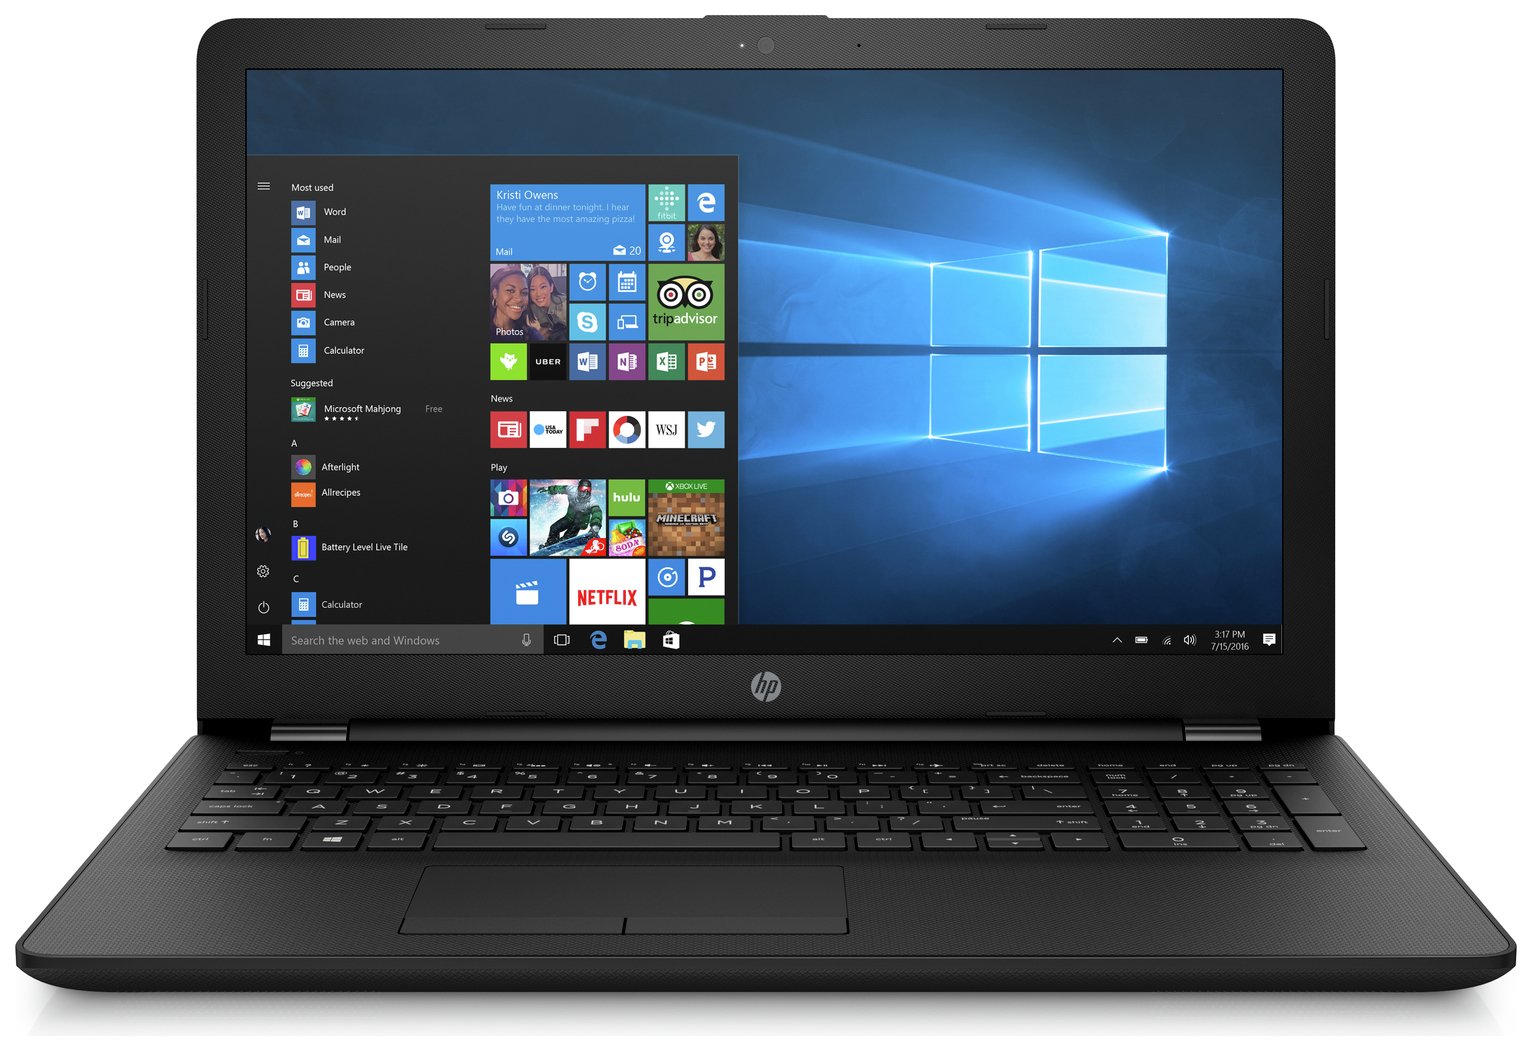 Review of HP 15.6 Inch Intel Celeron 4GB 1TB Laptop